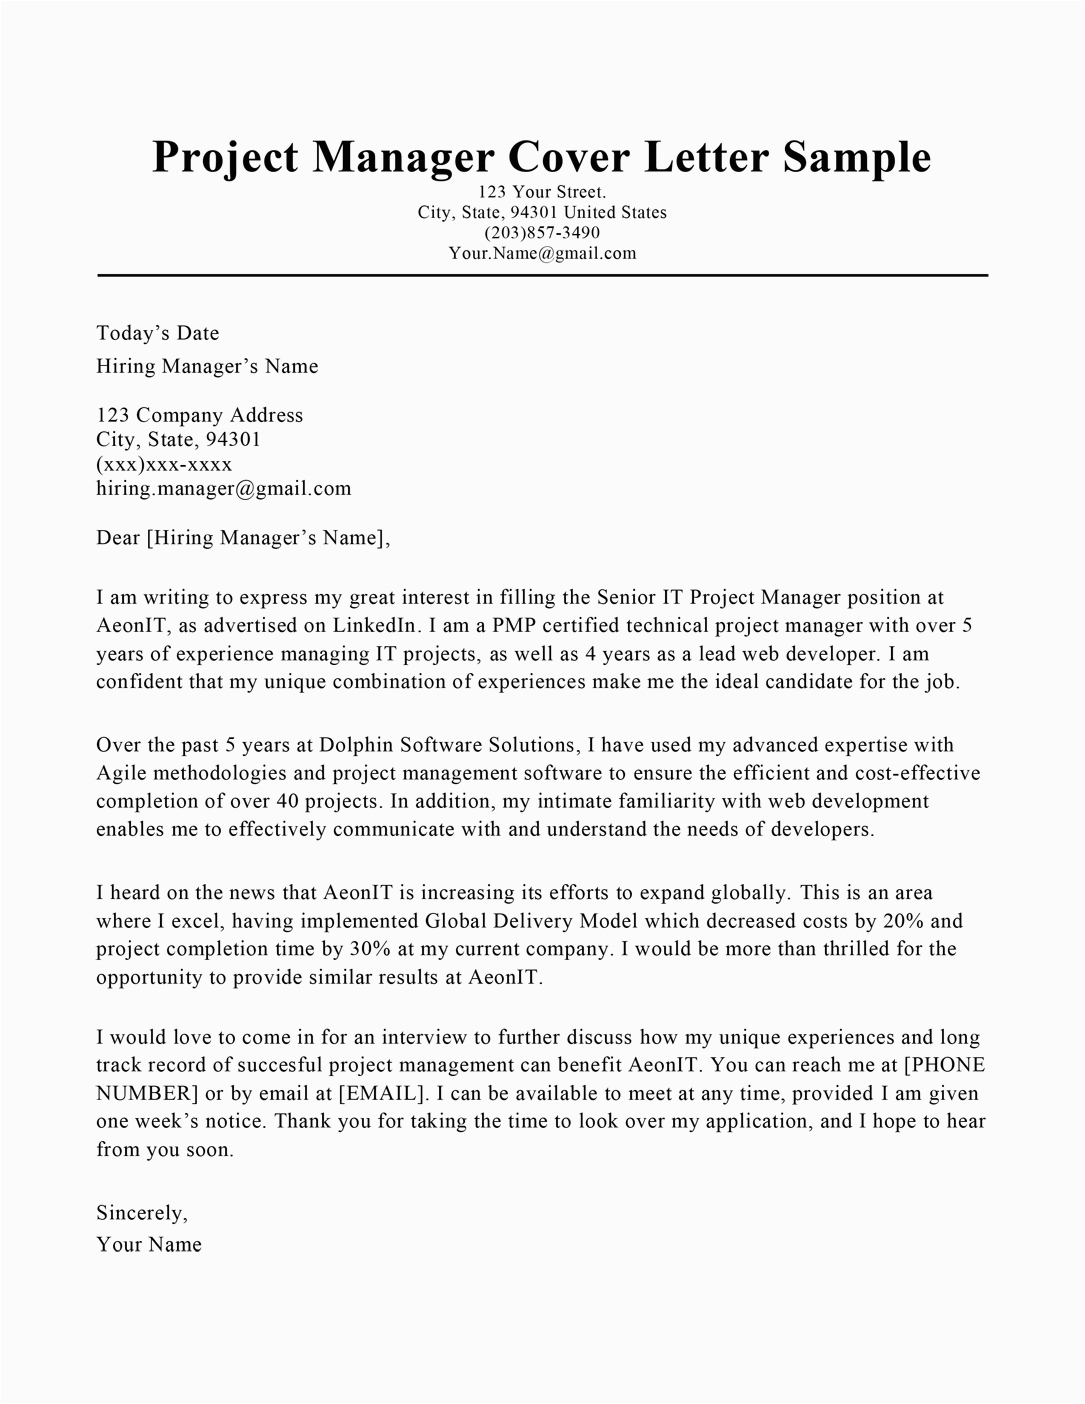 Sample Cover Letter for Resume Management Project Manager Cover Letter Sample & Tips